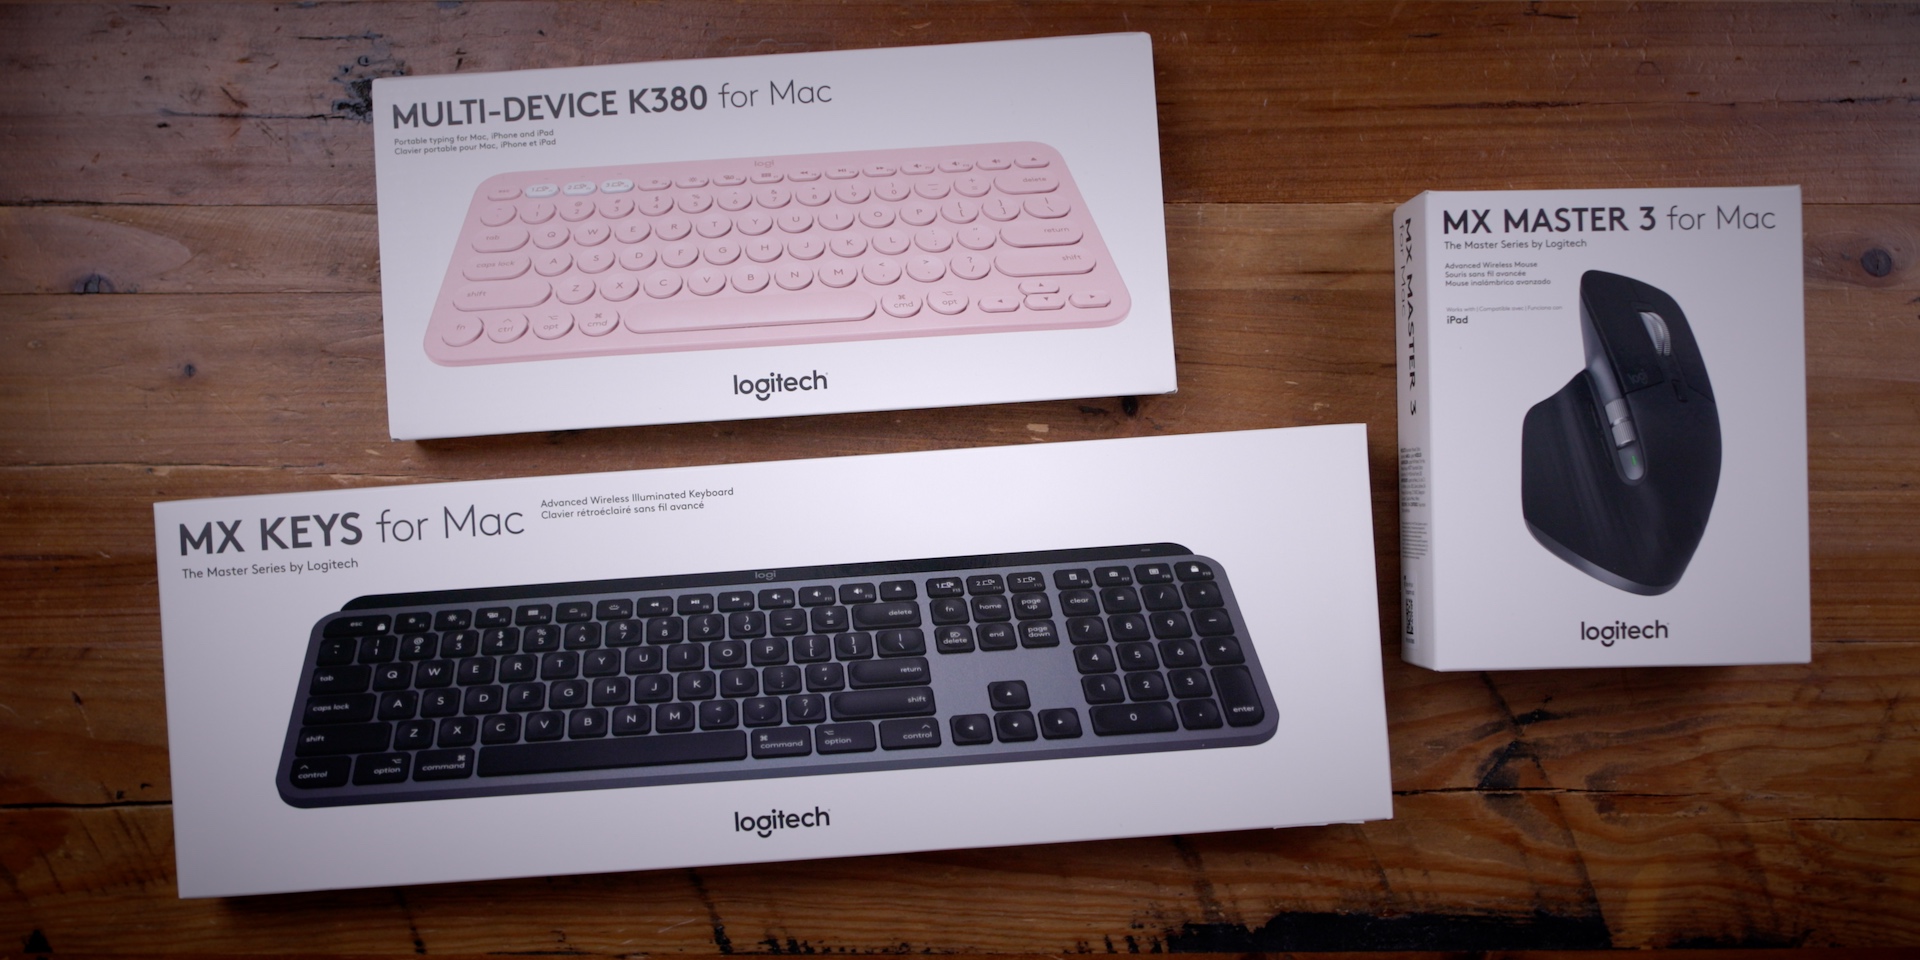 Hands-on: Logitech MX Master 3, MX Keys, and K380 keyboard - 9to5Mac